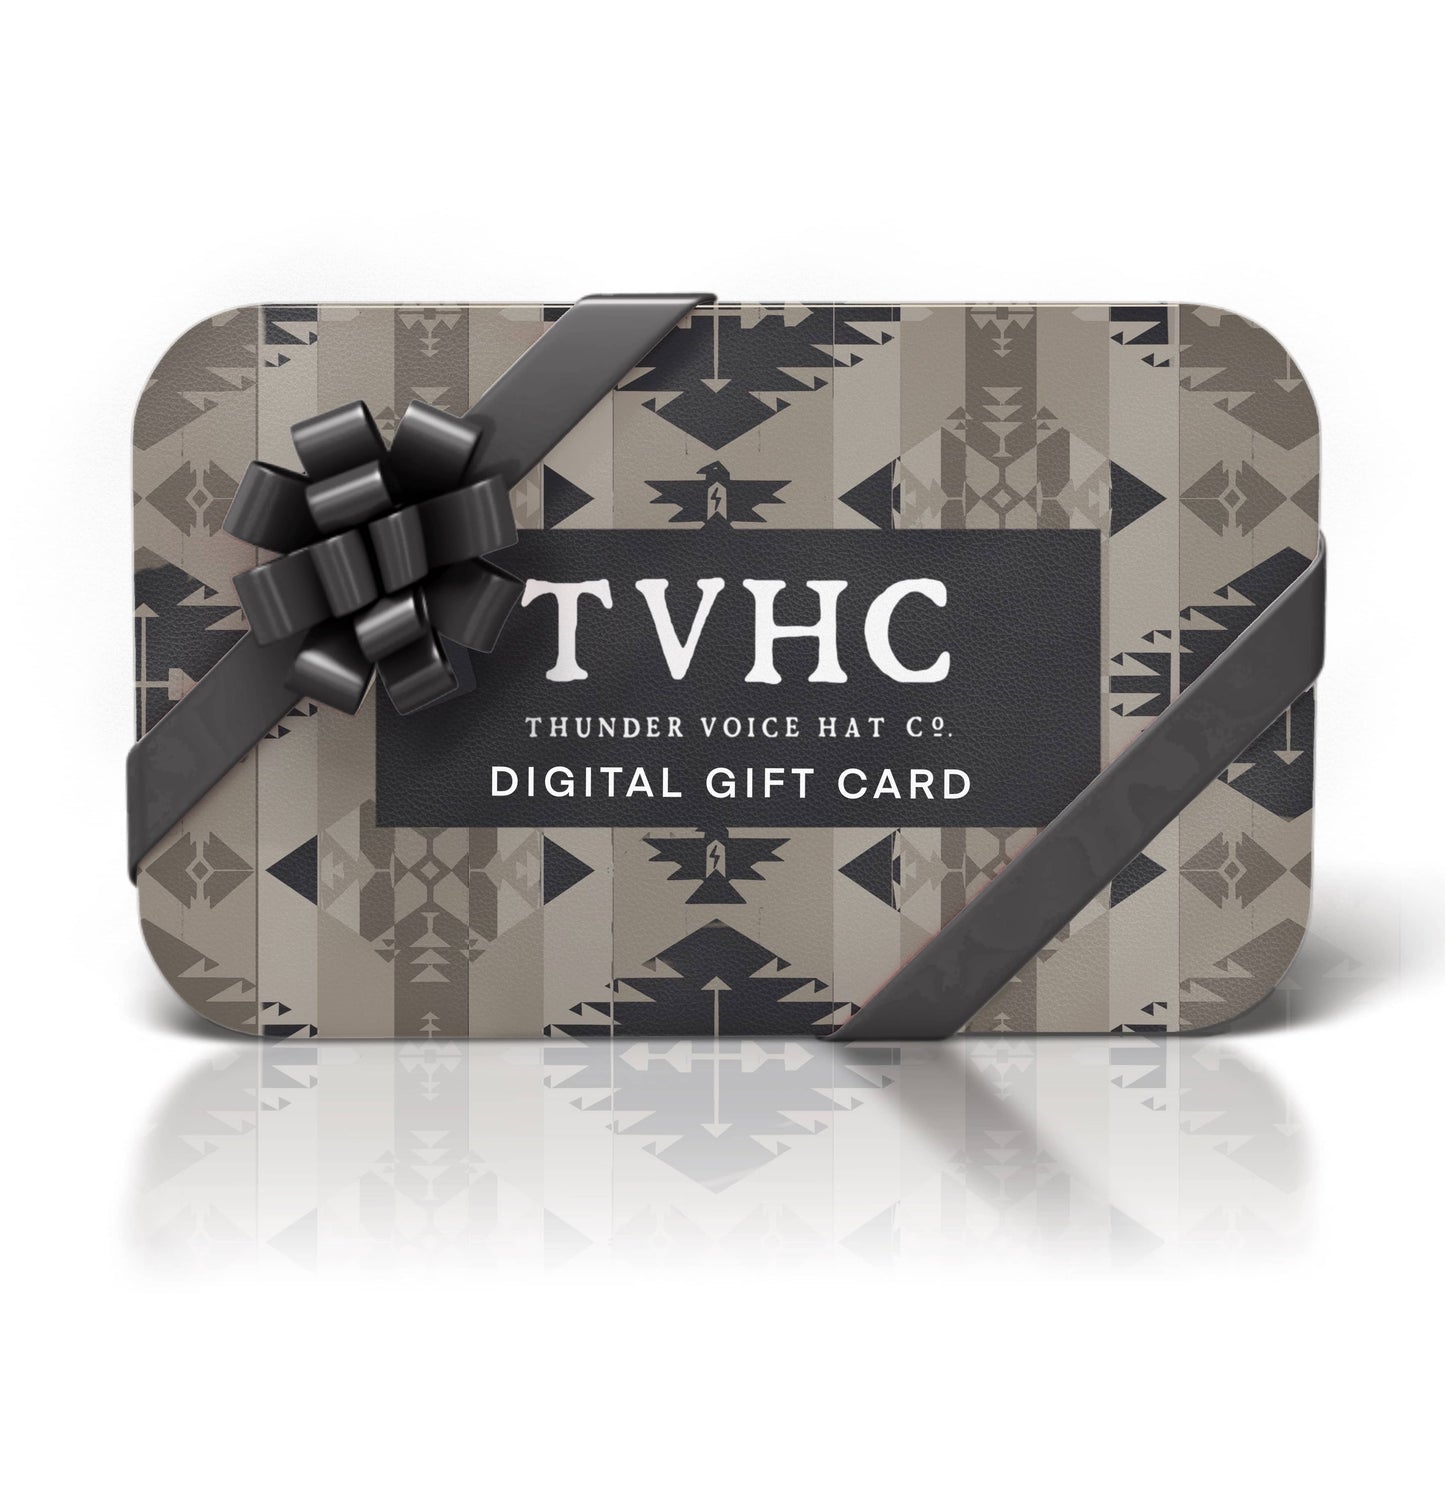 ThunderVoice Hat Co Digital Gift Card